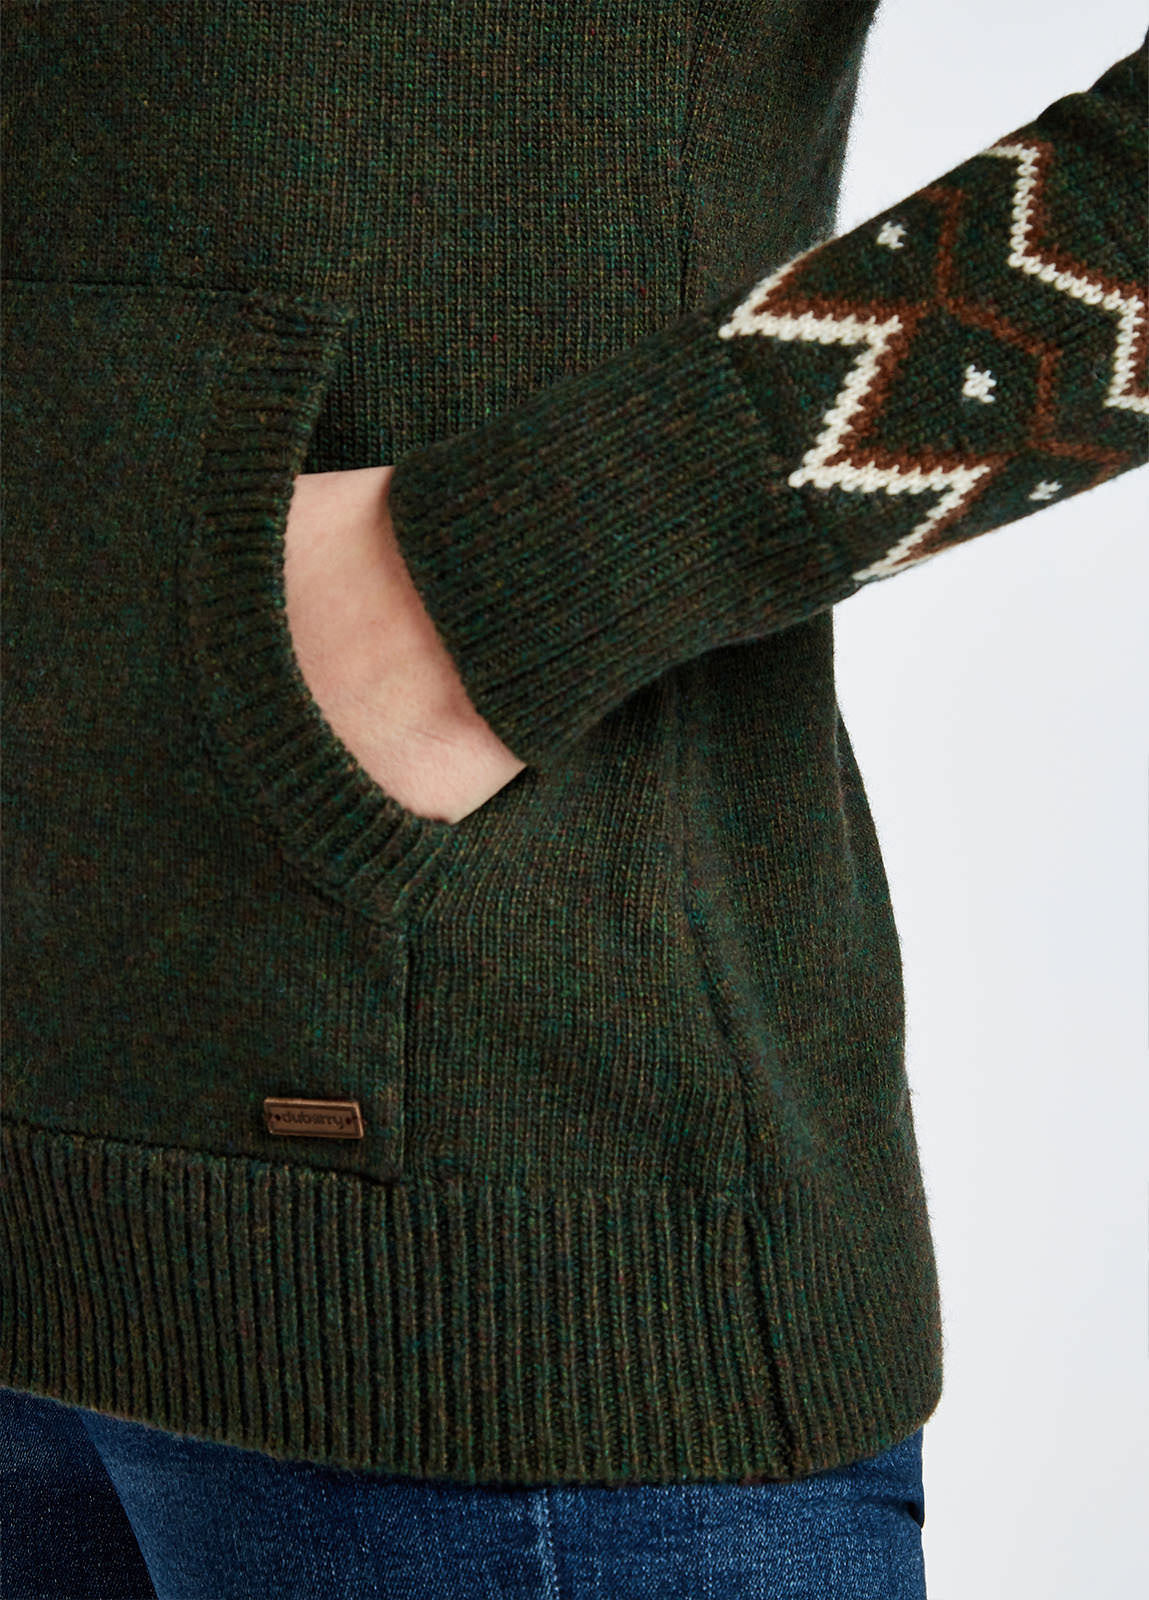 Balbriggan Sweater - Olive